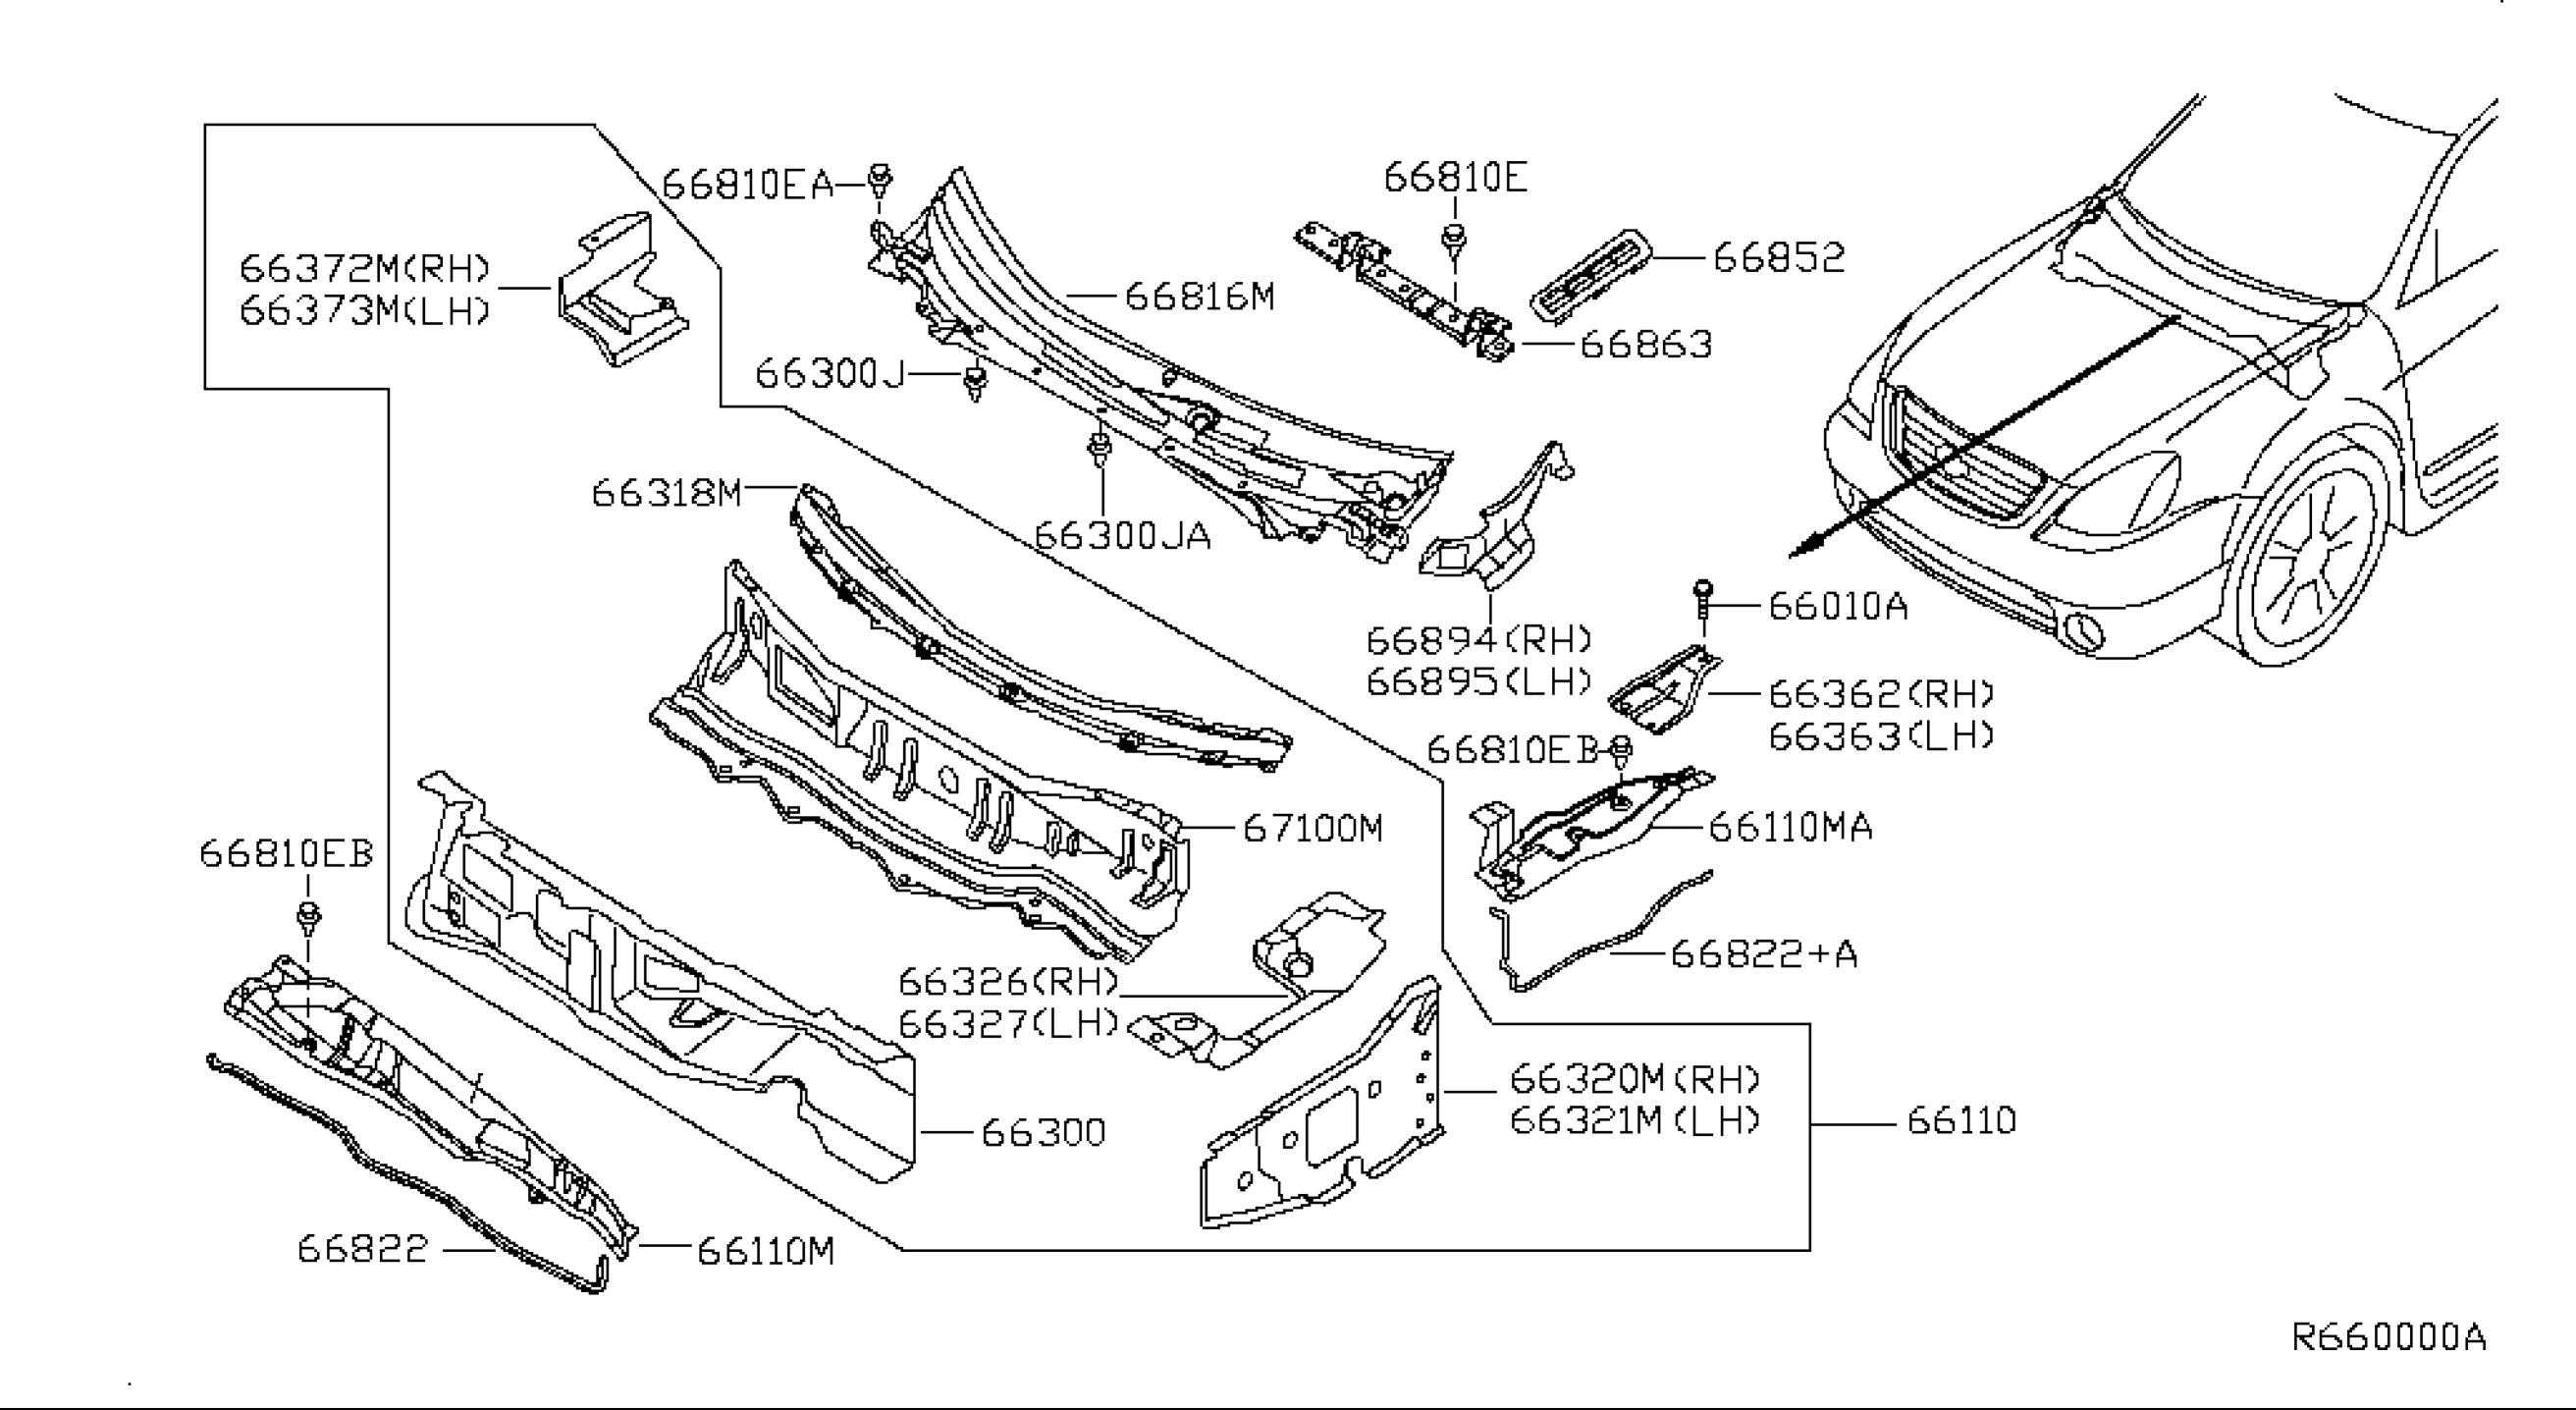 Dyson Dc15 Parts Diagram Fine Car Undercarriage Parts Diagram Gallery Simple Wiring Diagram Of Dyson Dc15 Parts Diagram